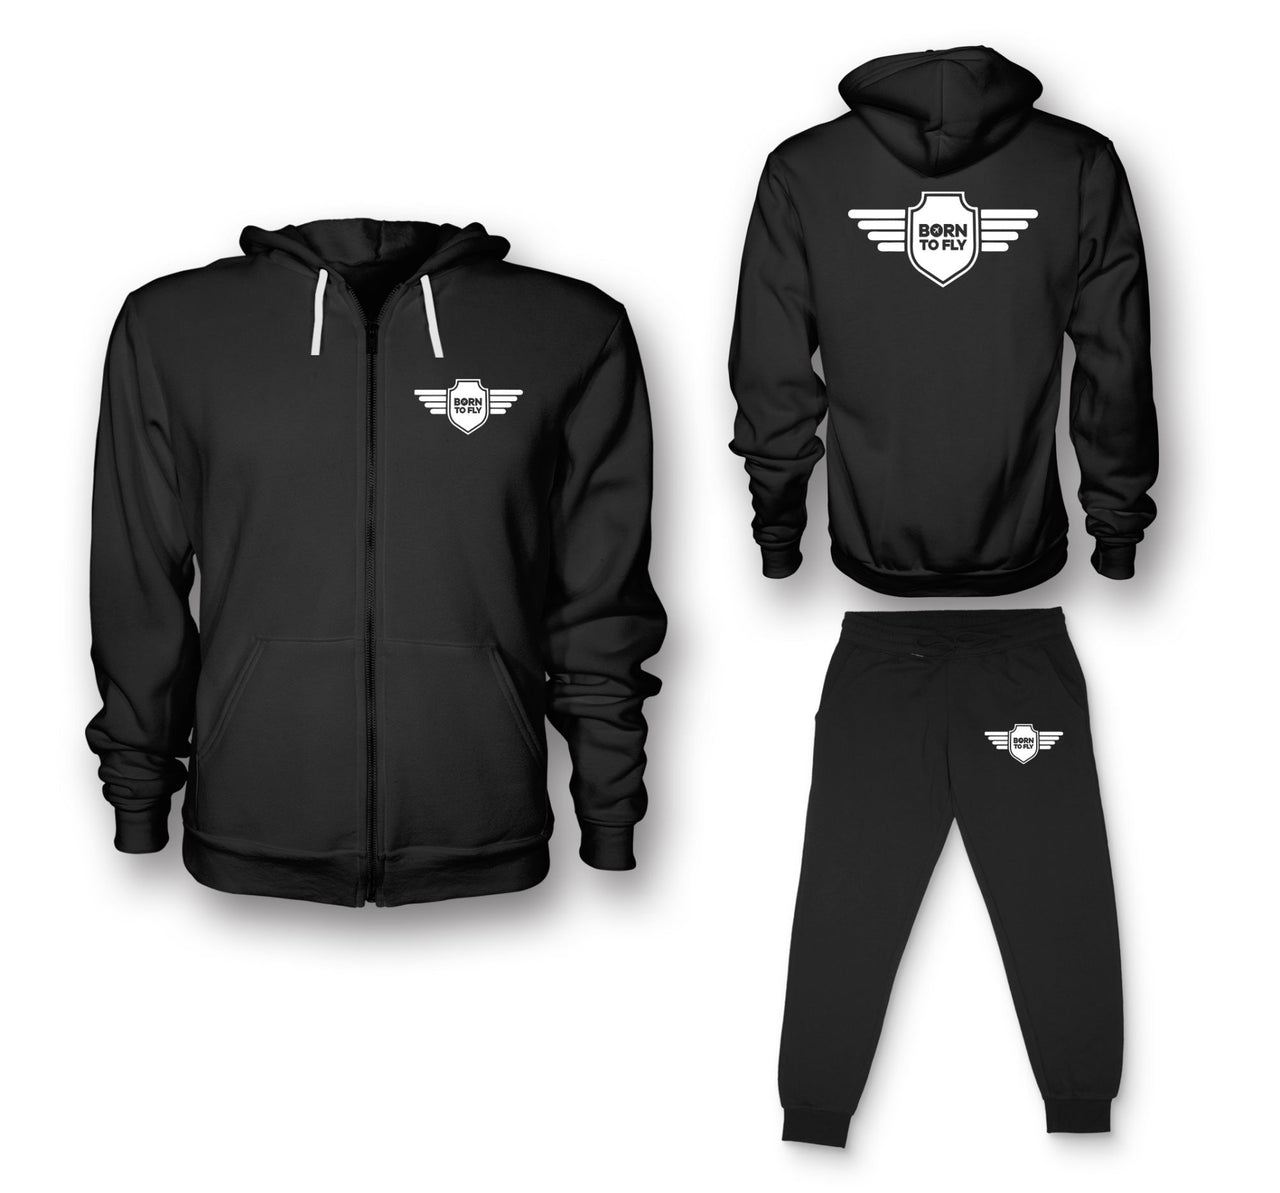 Born To Fly & Badge Designed Zipped Hoodies & Sweatpants Set